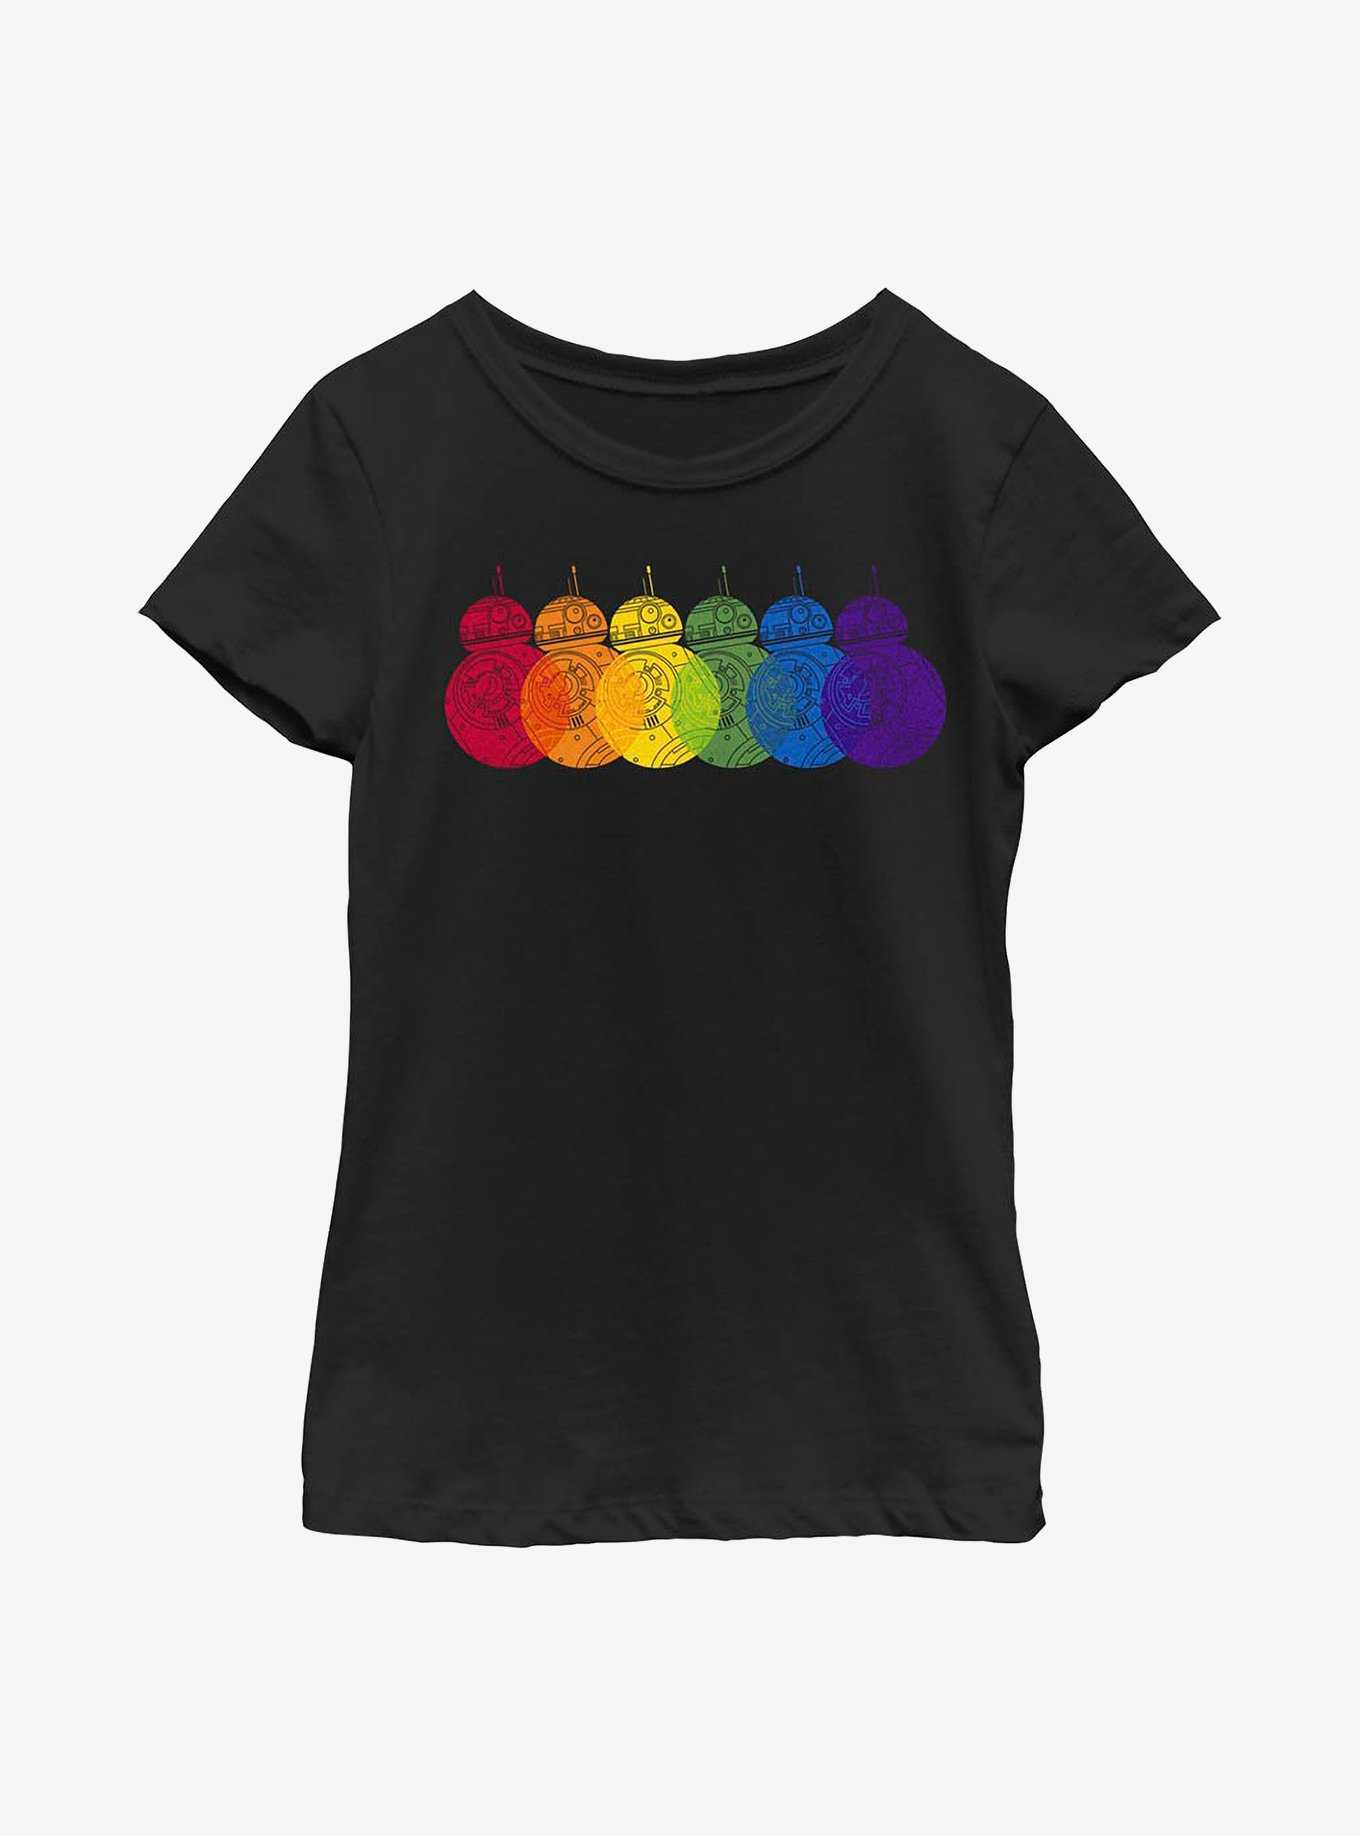 Star Wars Pride BB-8 Rainbows Logo Youth T-Shirt, , hi-res